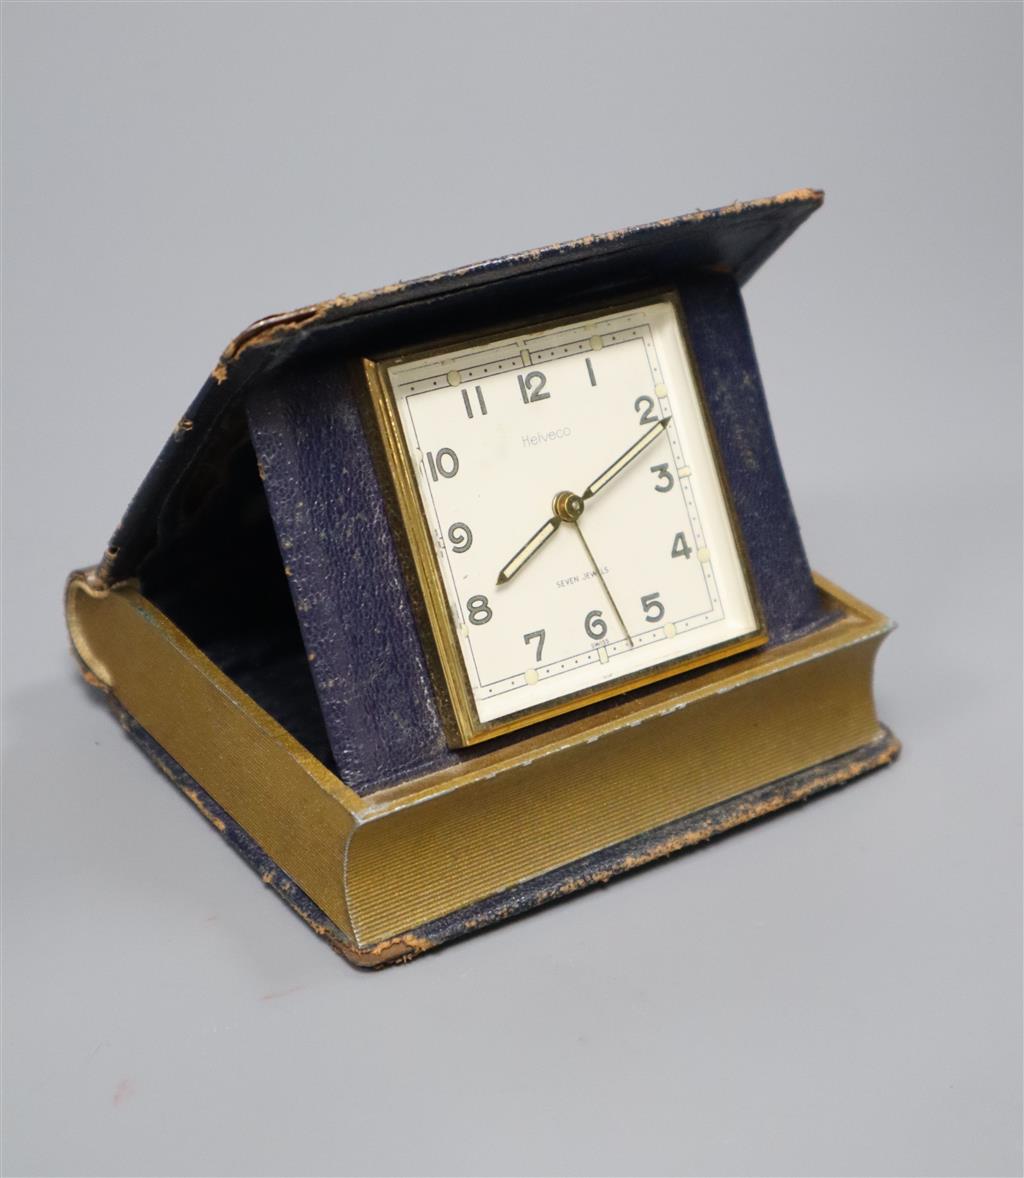 A Helveco travelling novelty timepiece, length 10.5cm